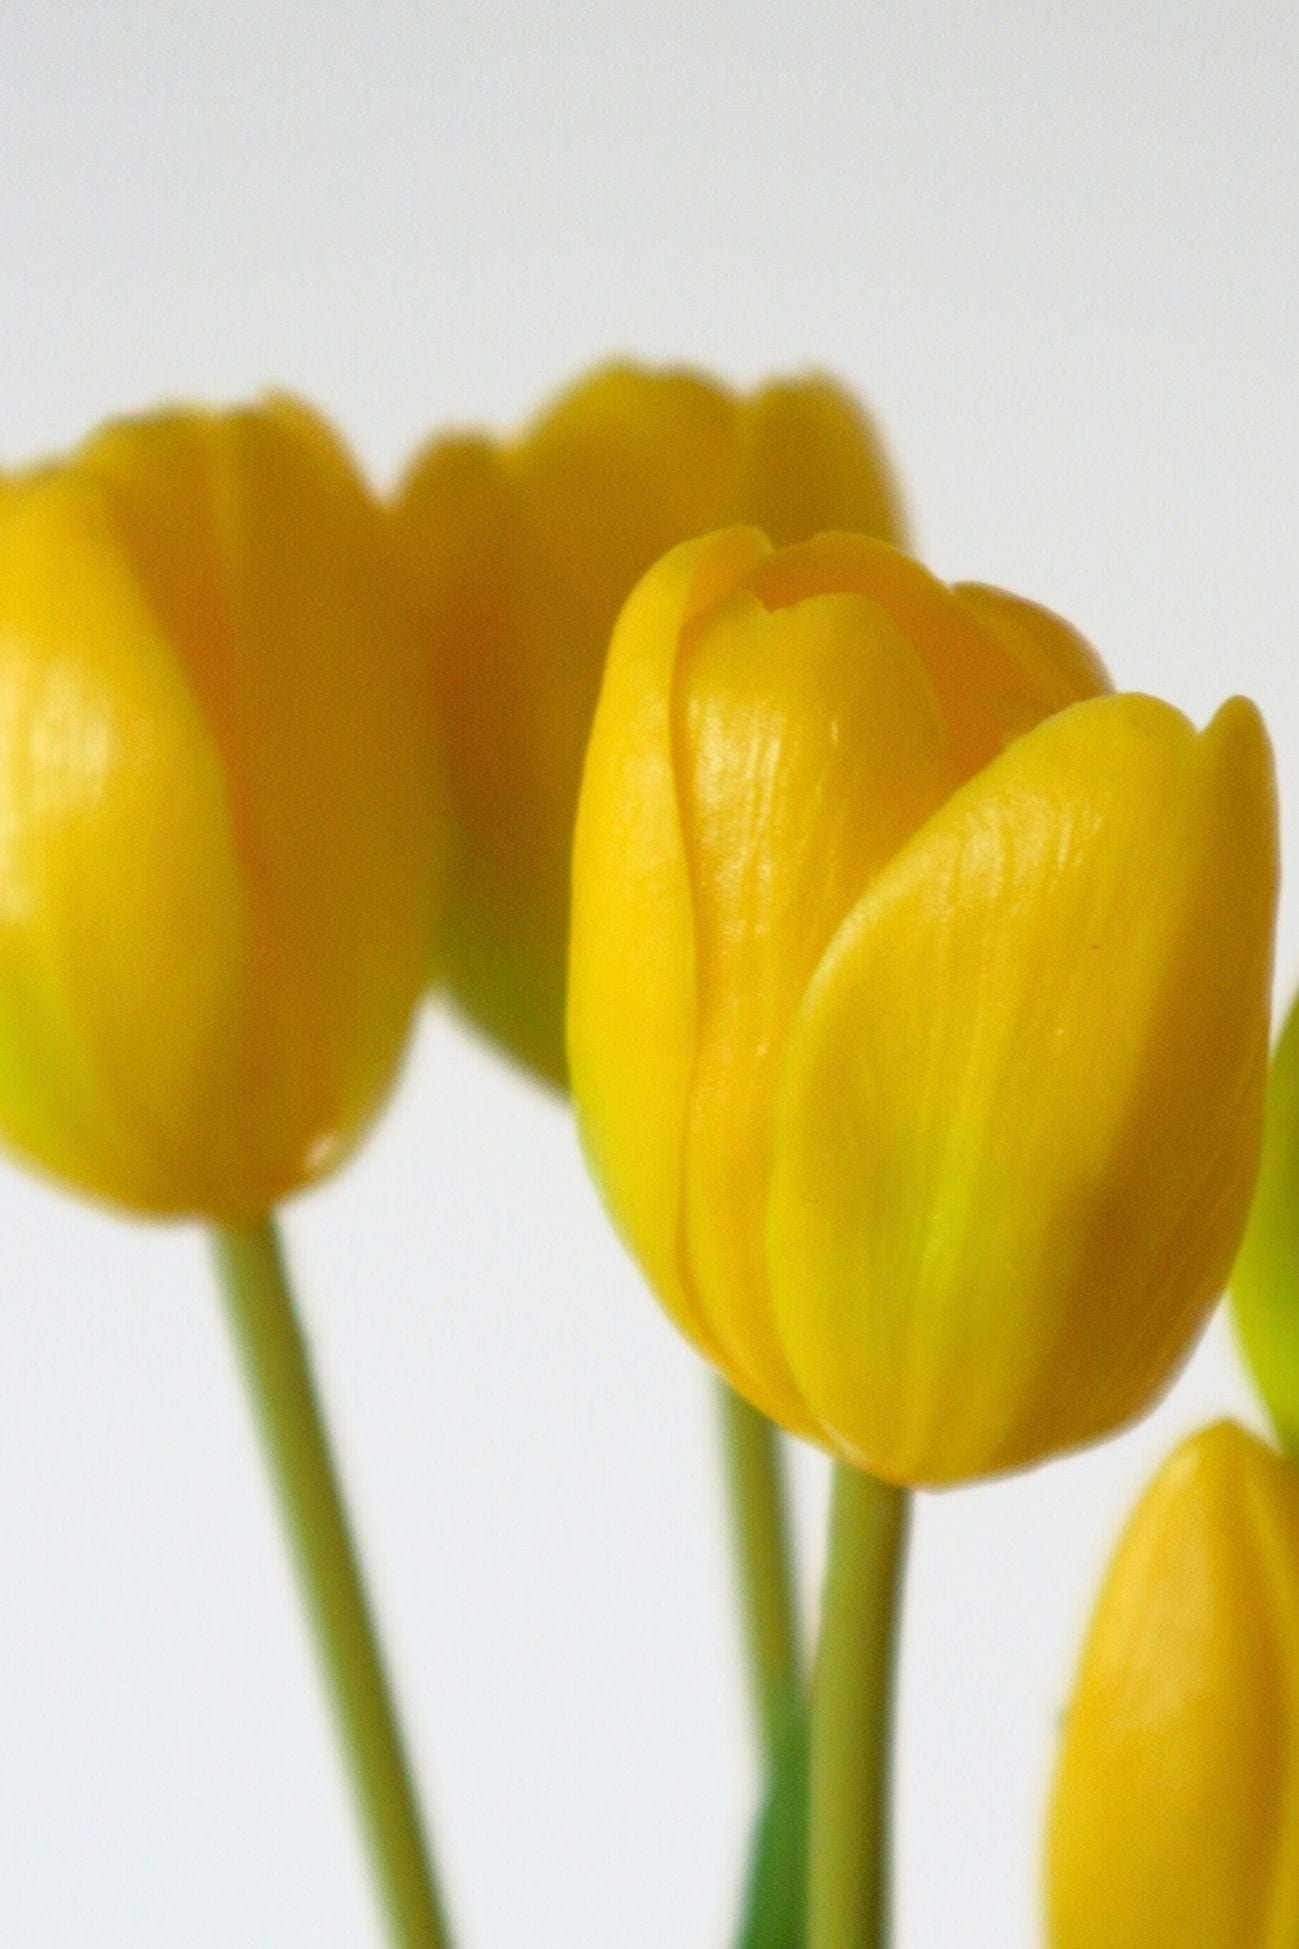 Jolipa Aletheia Aletheia - Mazzo di 5 tulipani artificiali color giallo 40 cm | Jolipa